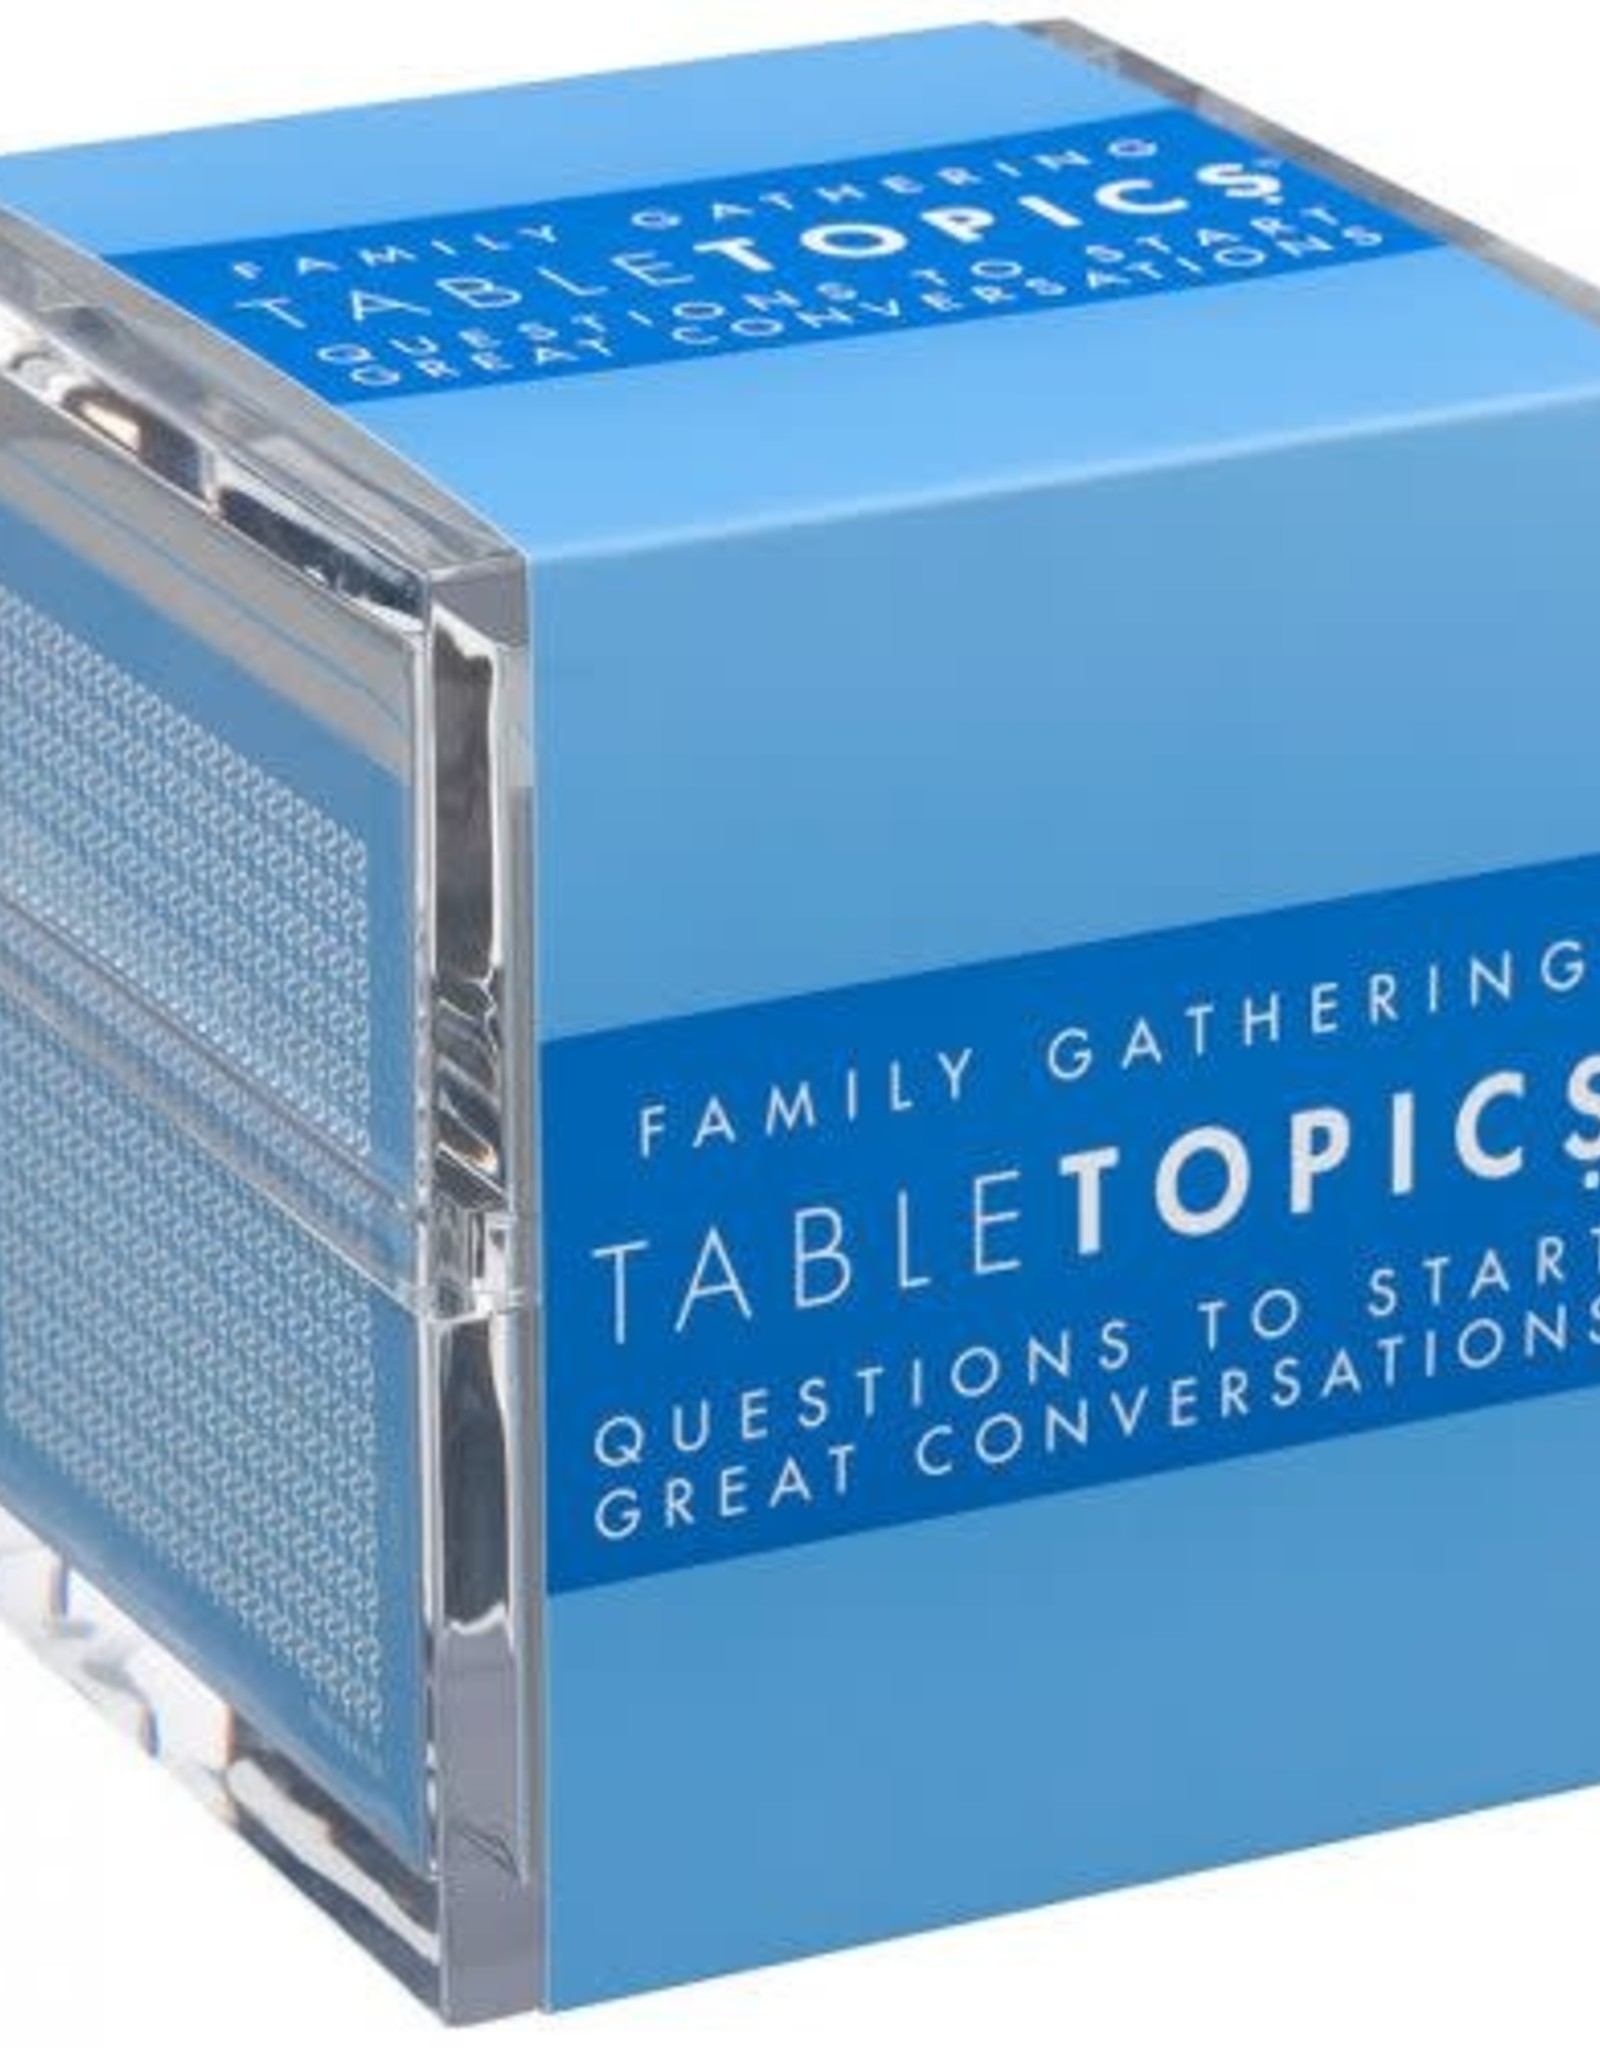 Tabletopics FAMILY GATHERING TABLE TOPICS